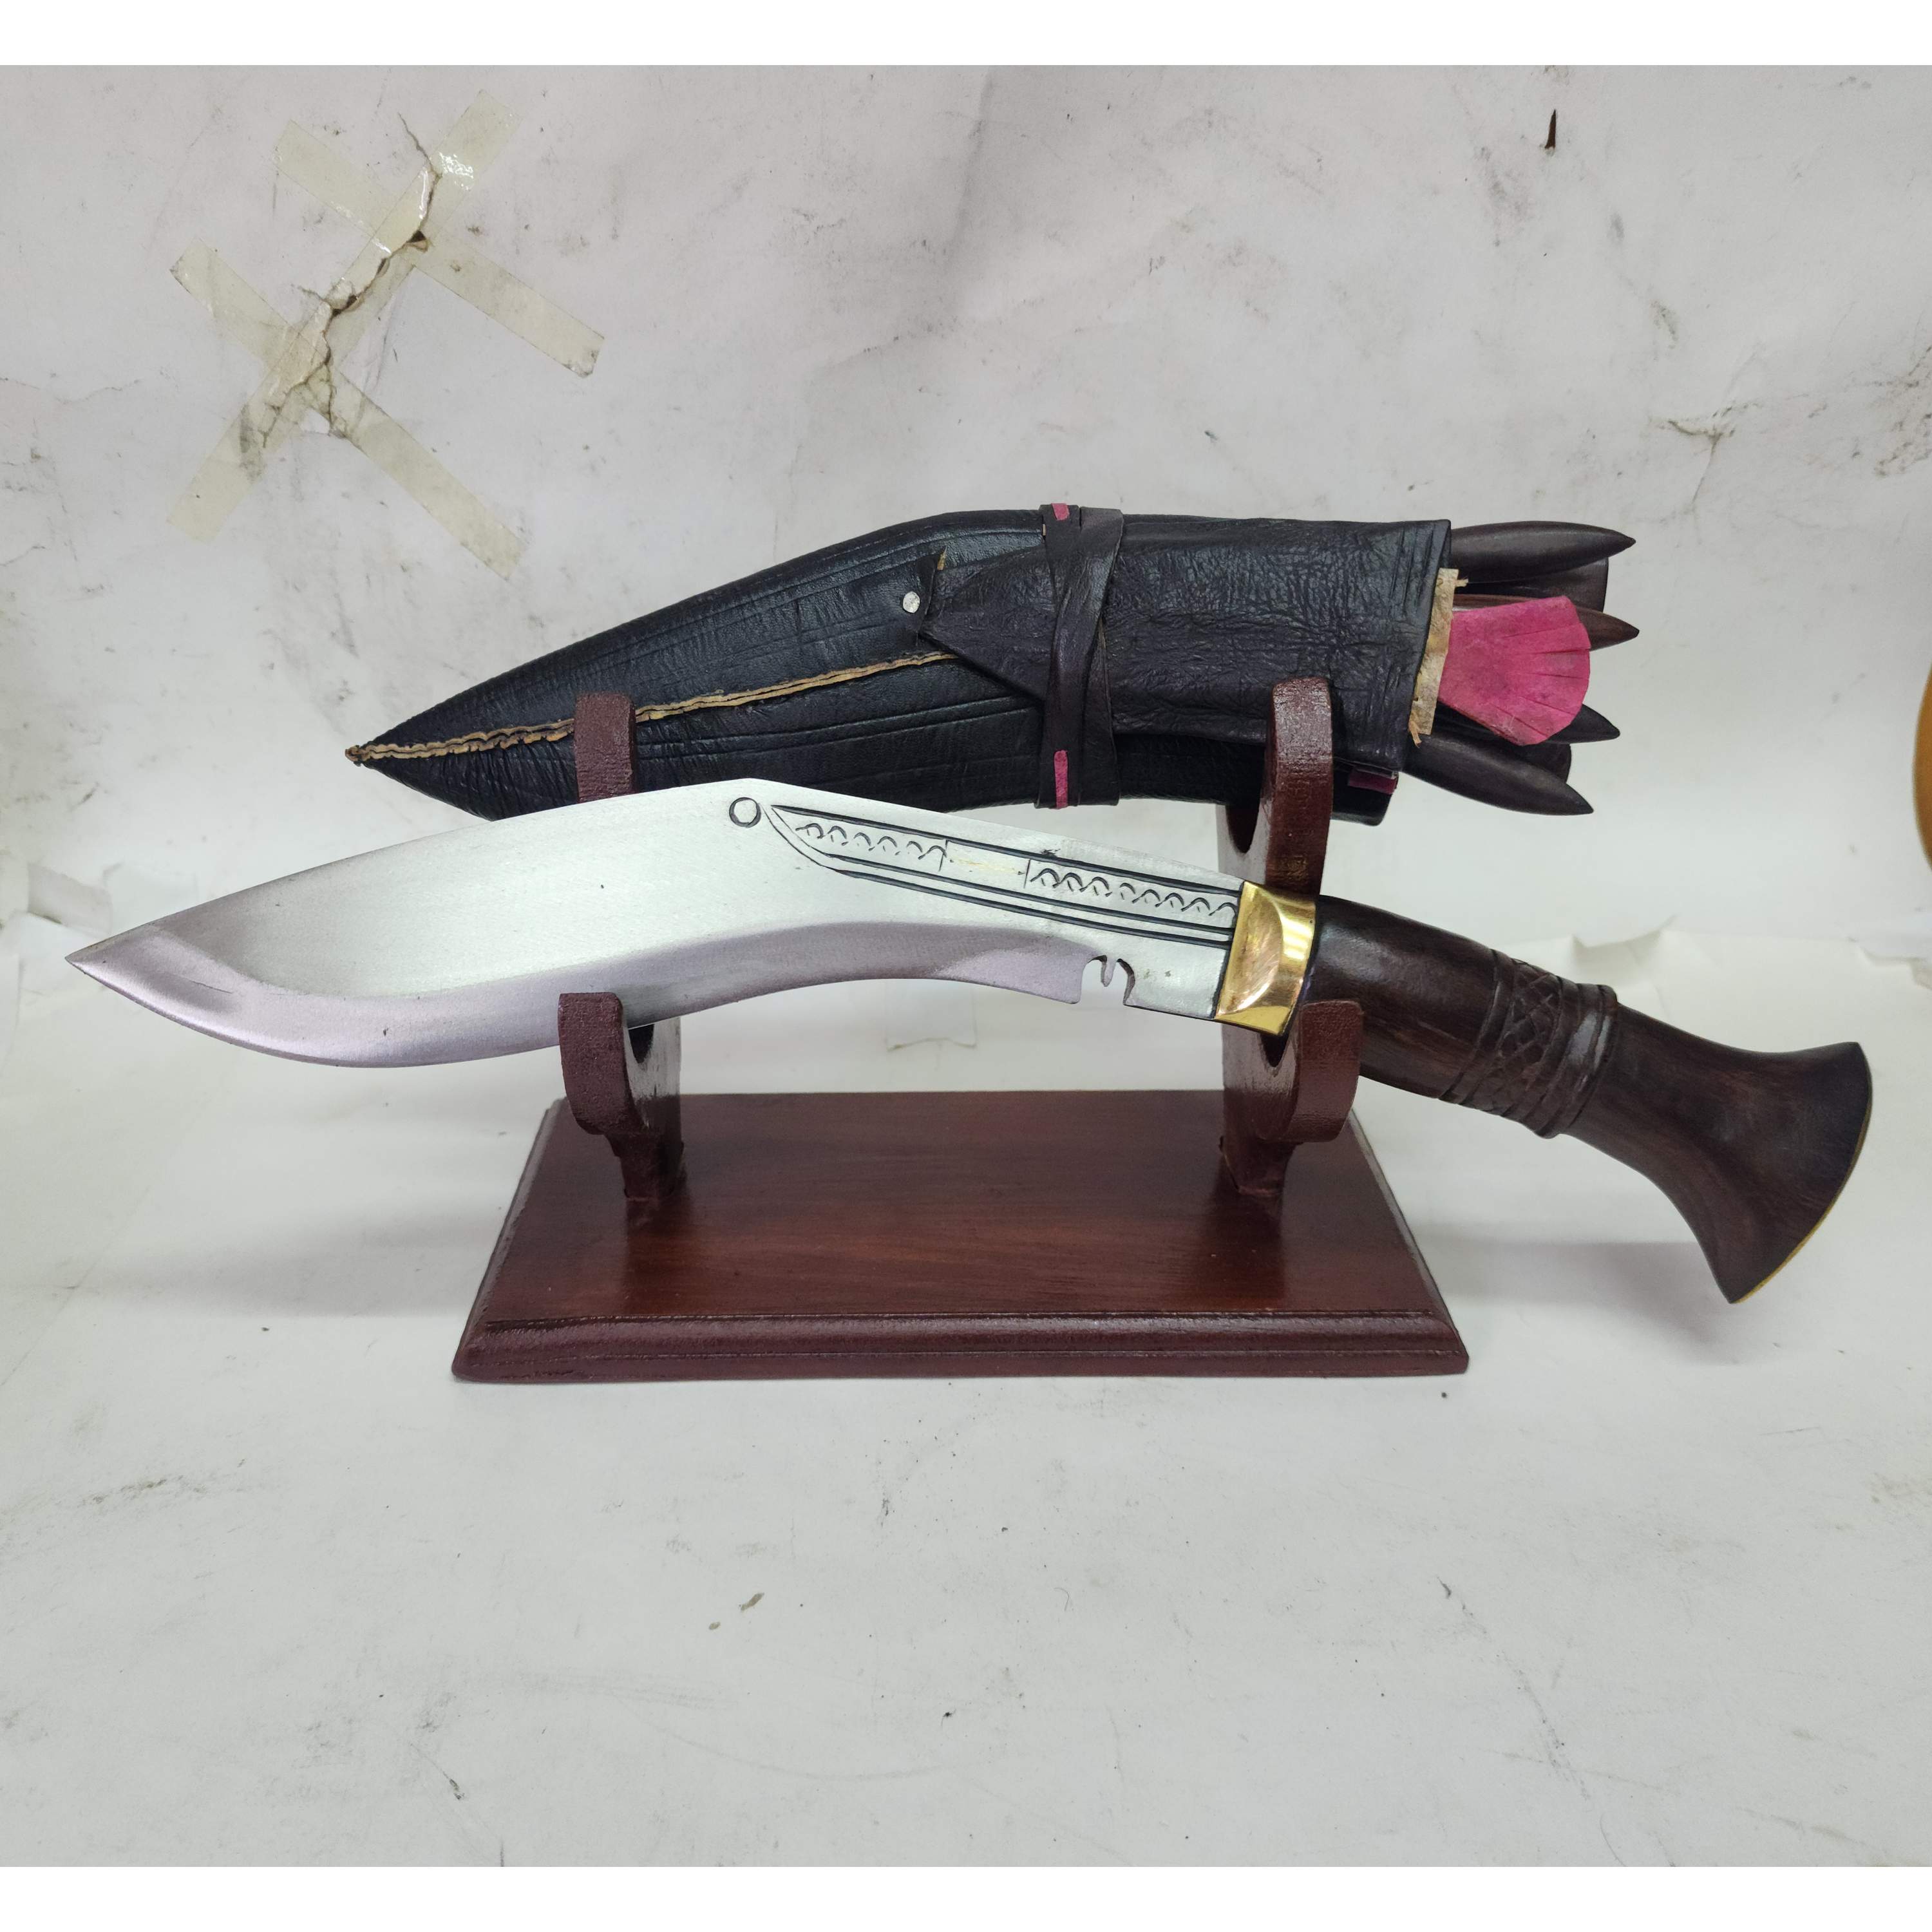 8 Inch, ganjawal Khukuri, Gurkha Knife With Leather Cover And Stand, Nepali Machete